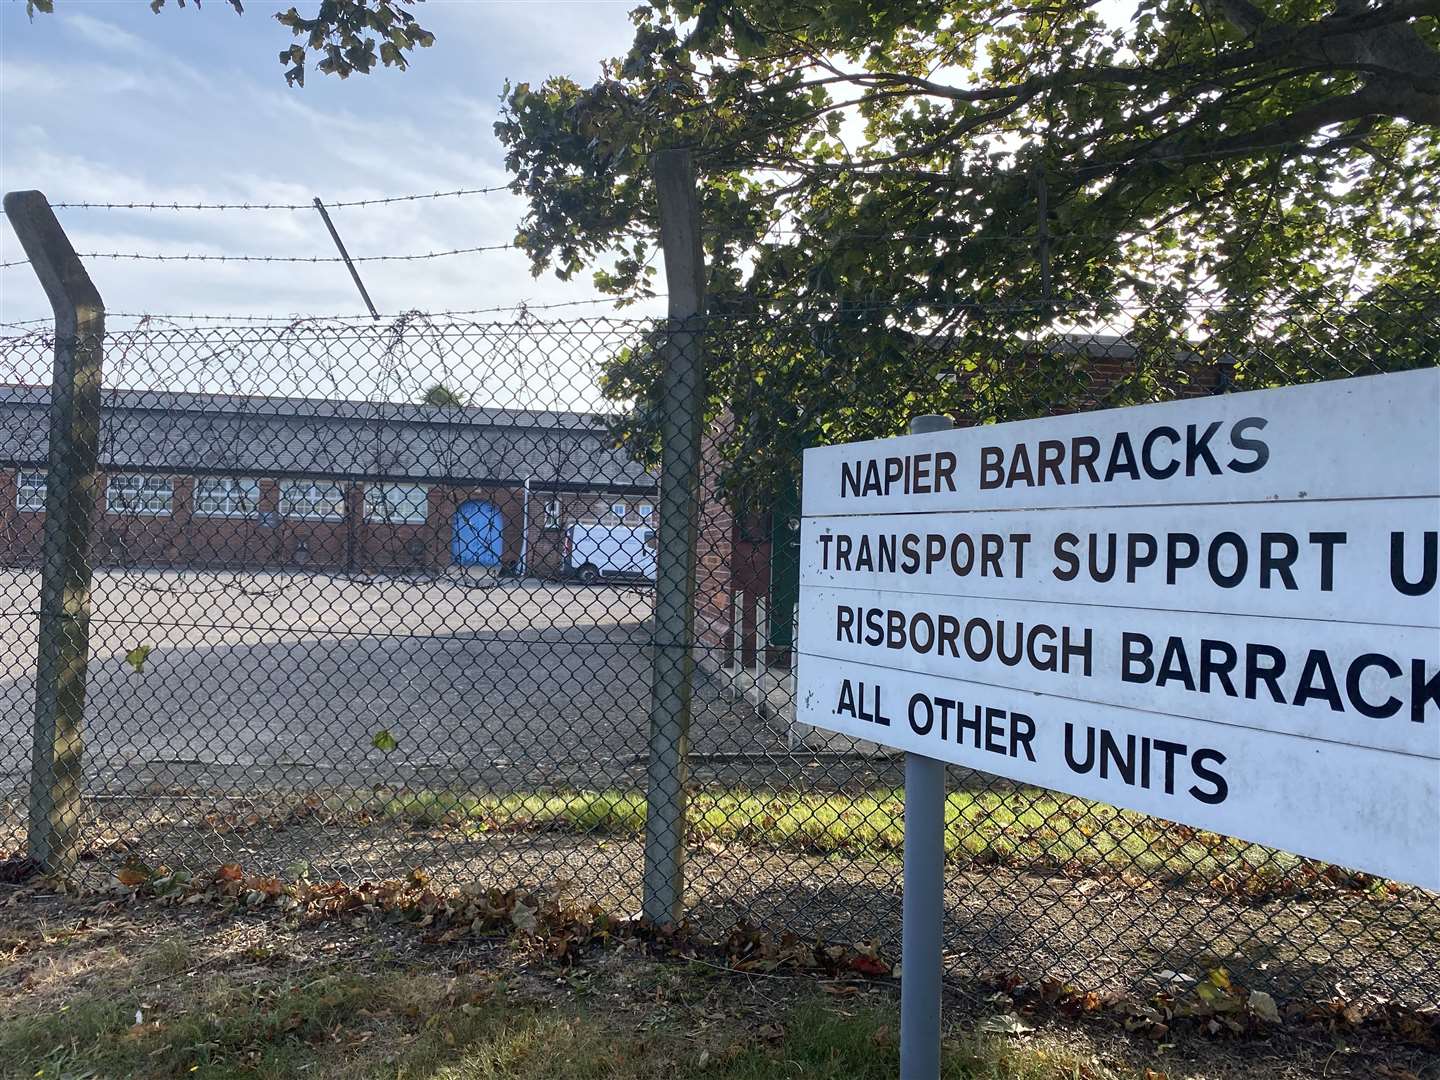 Napier Barracks in Folkestone has been used to house asylum seekers since September